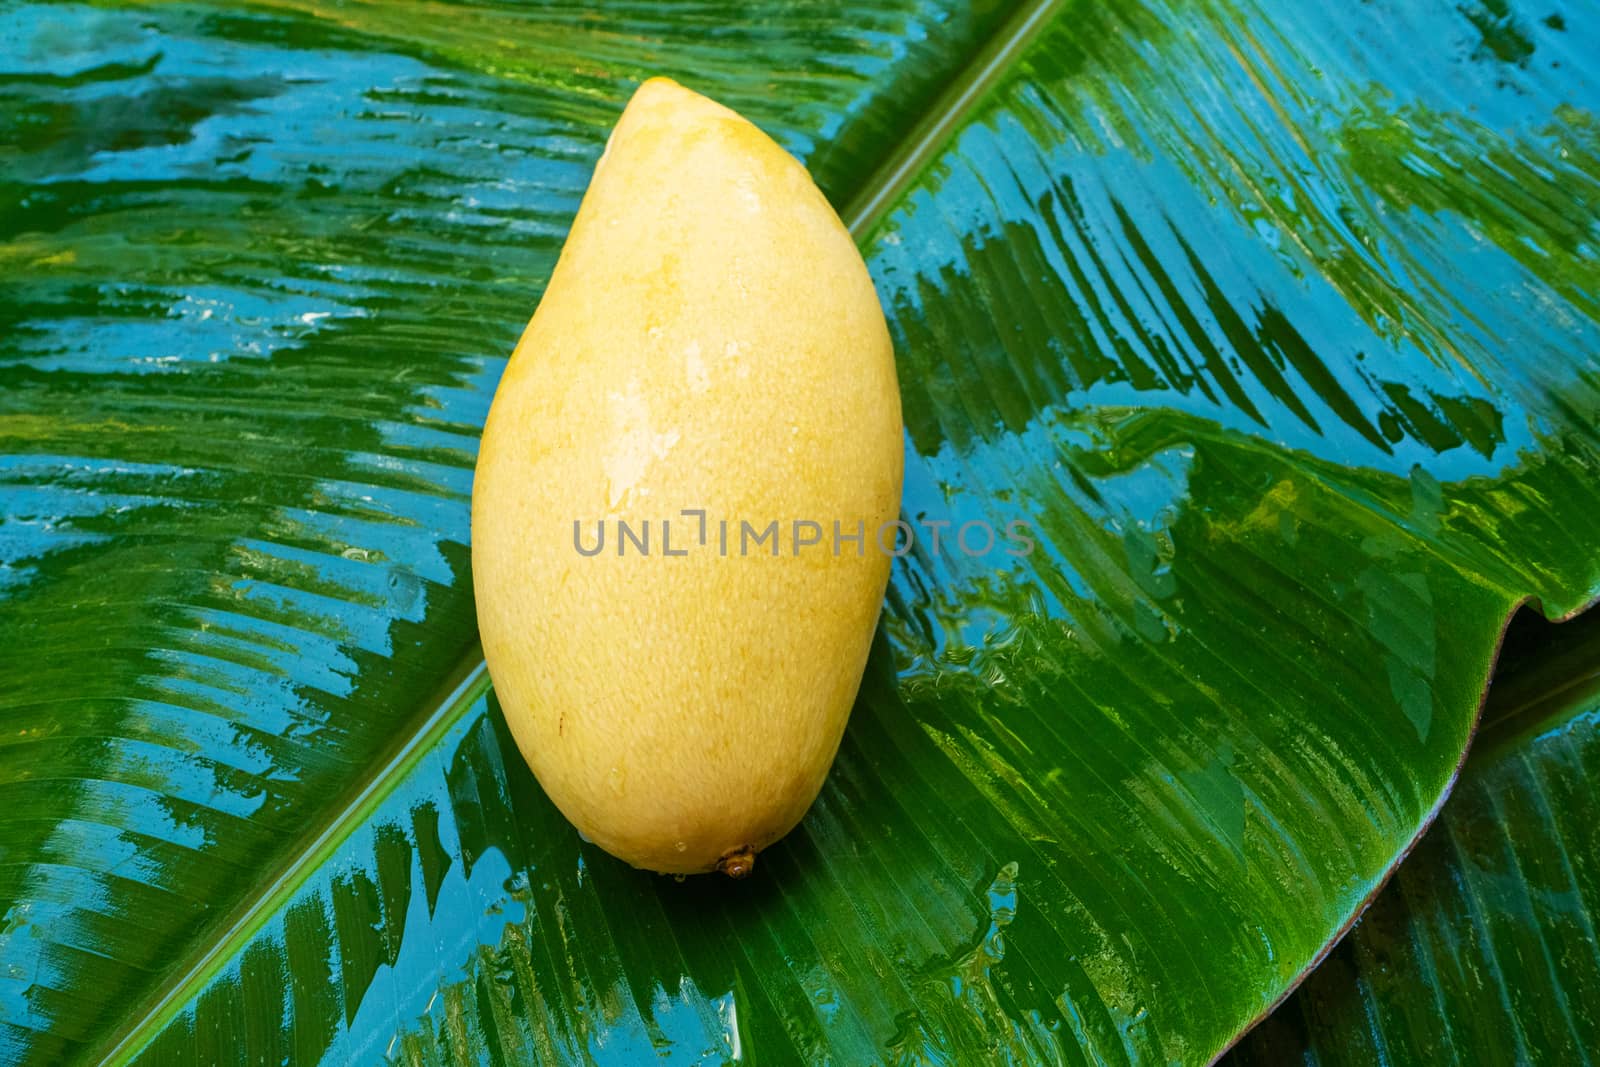 Ripe yellow mango fruit on a wet banana leaf. Natural food.